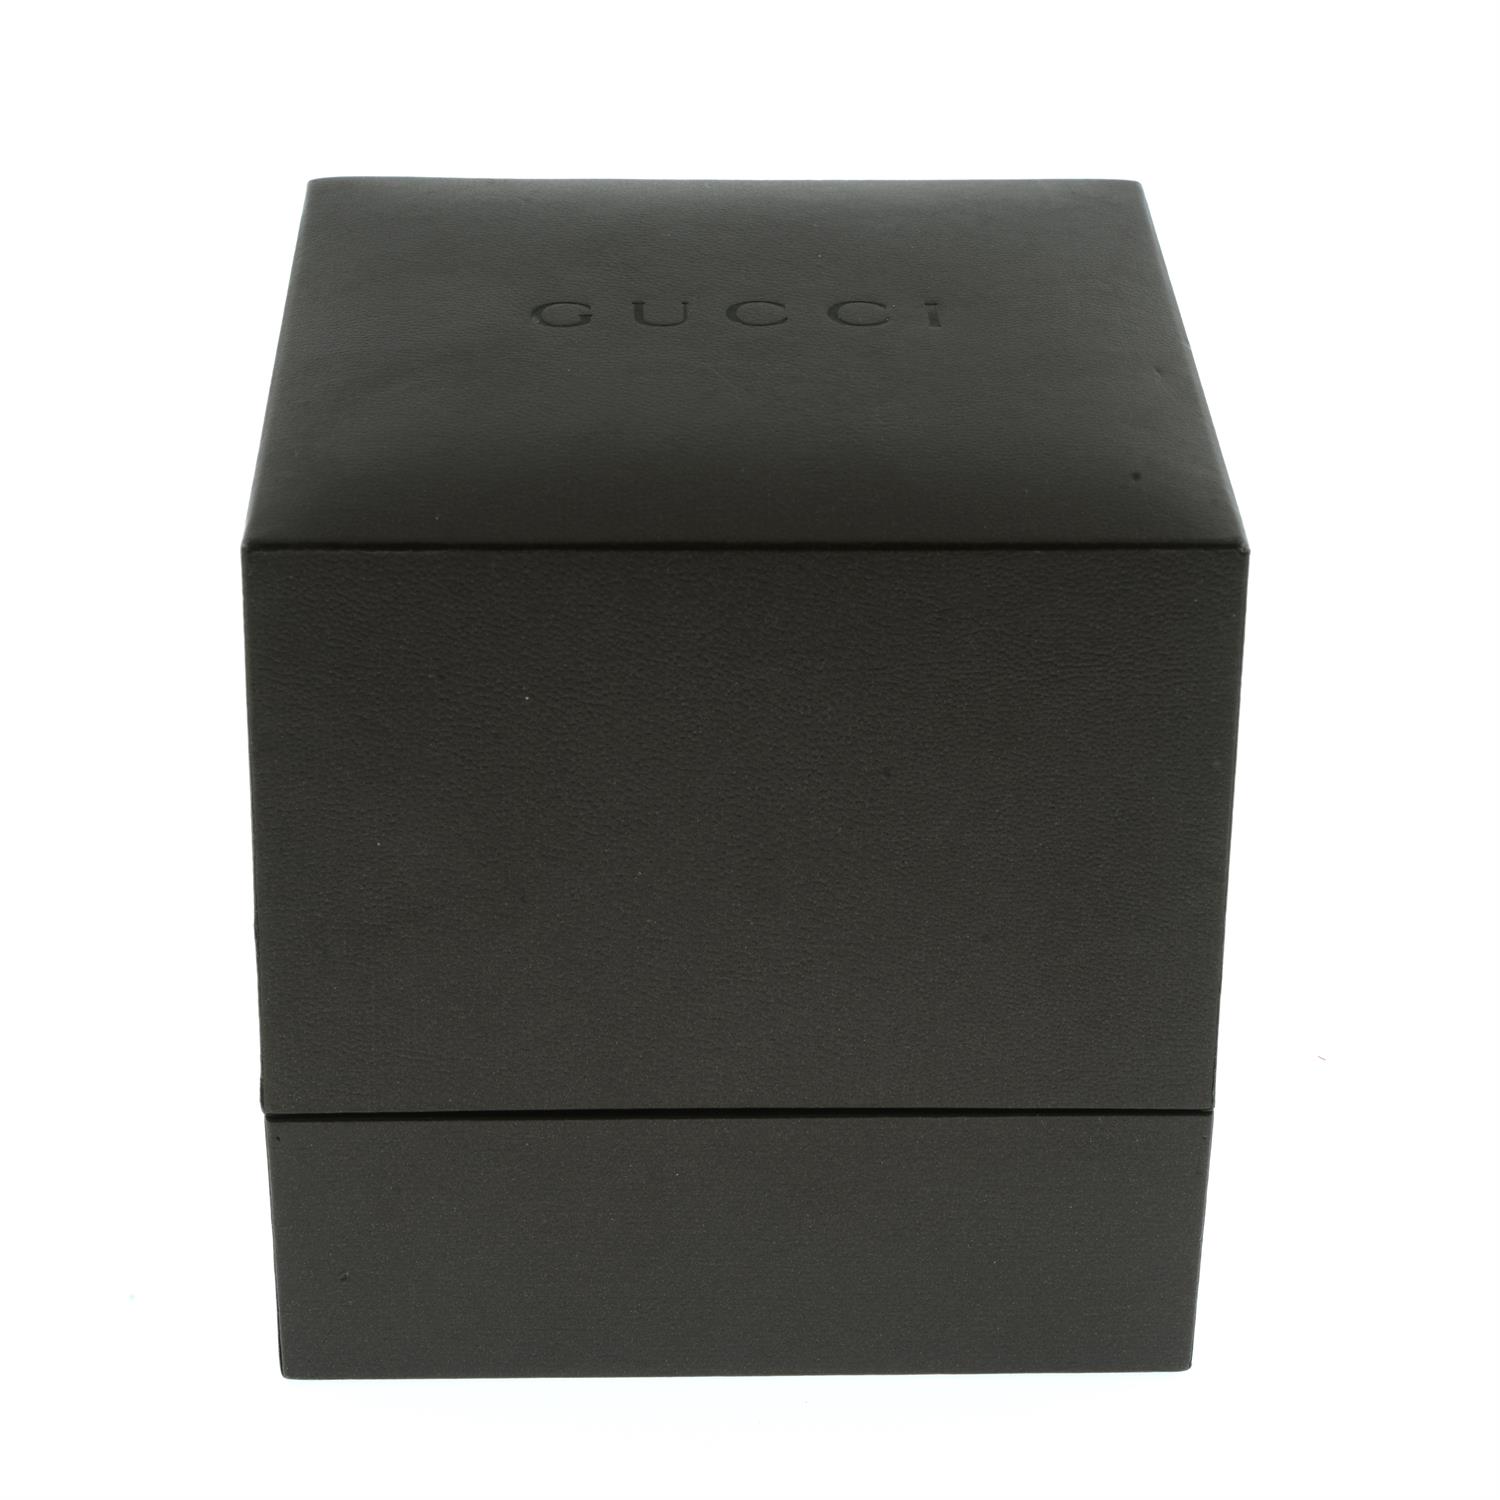 Gucci - Mini G watch. - Image 3 of 3